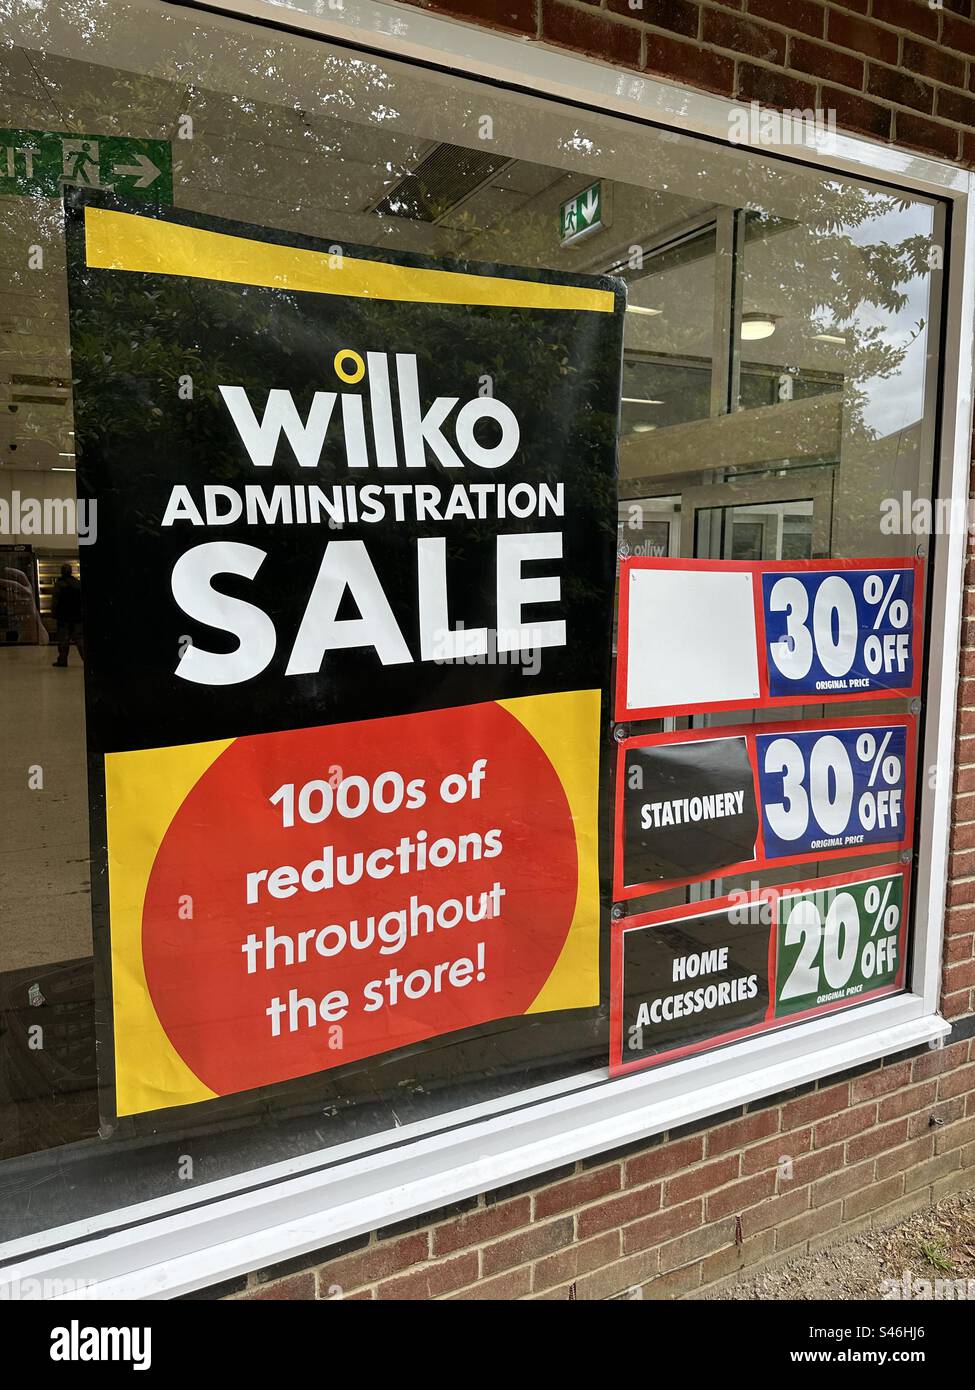 Wilko store window in Bordon, Hampshire displaying ‘ADMINISTRATION SALE’ Stock Photo